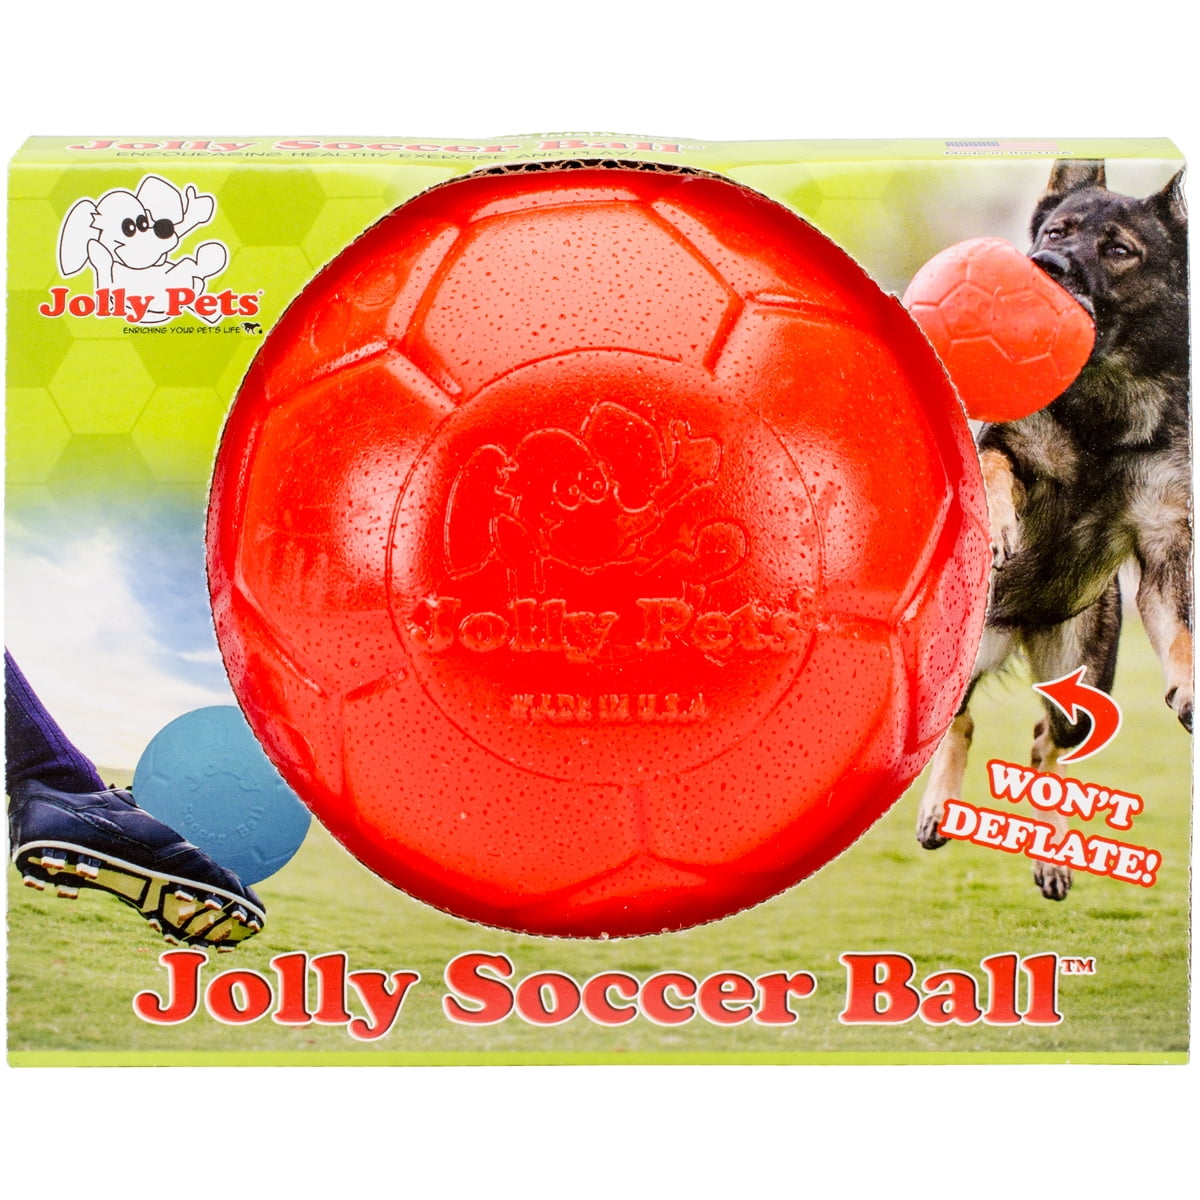 Мяч 6 футбол. Jolly Soccer Ball для собак. Jolly Pets игрушки для собак. Мячи Jolly Pets. Мяч для собак неубиваемый Jolly.